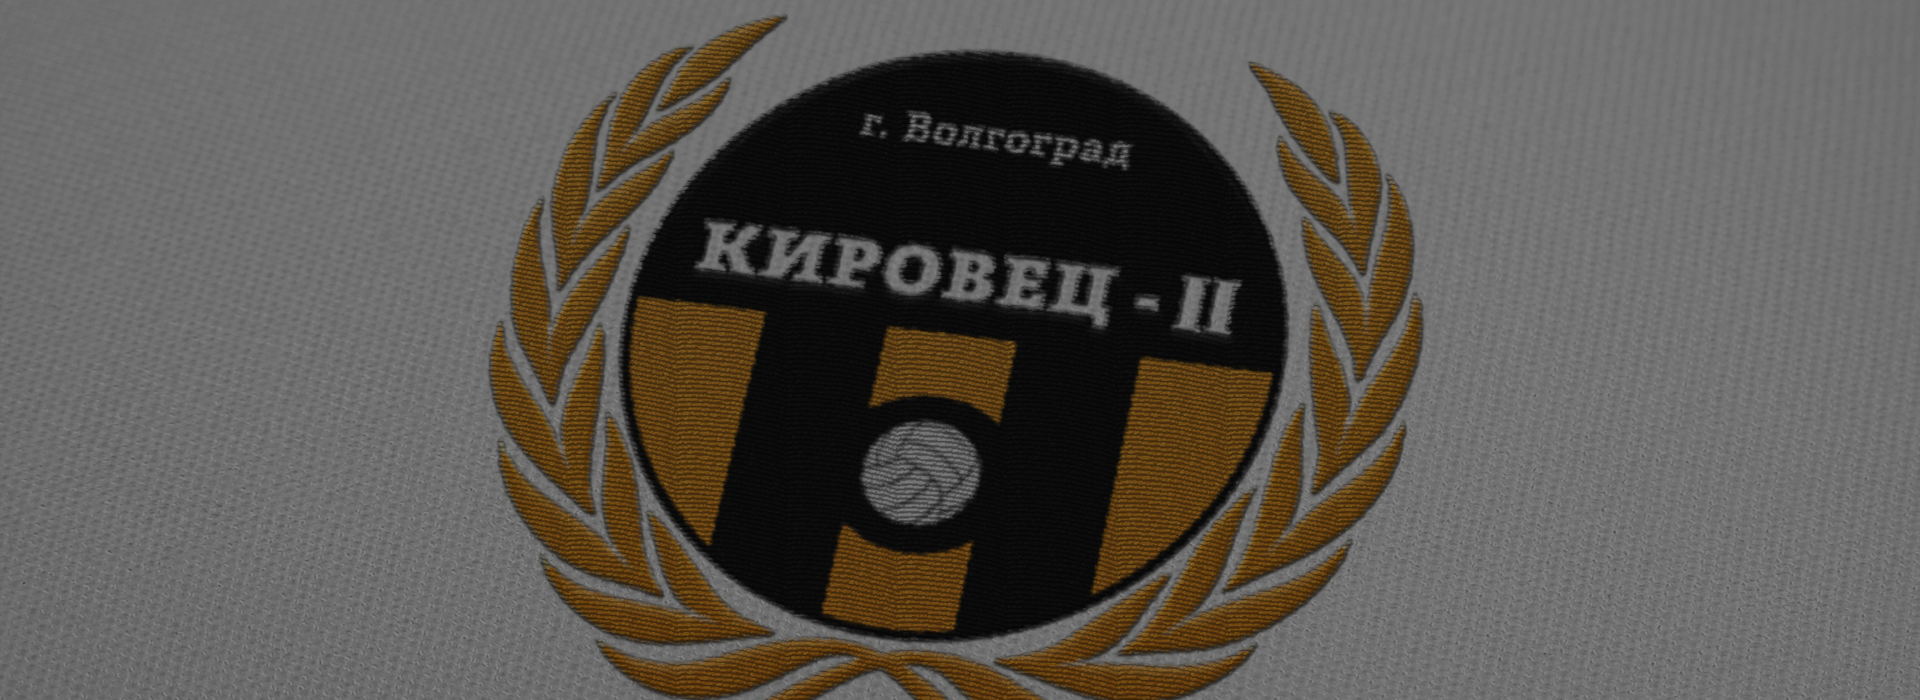 Логотип - КИРОВЕЦ II